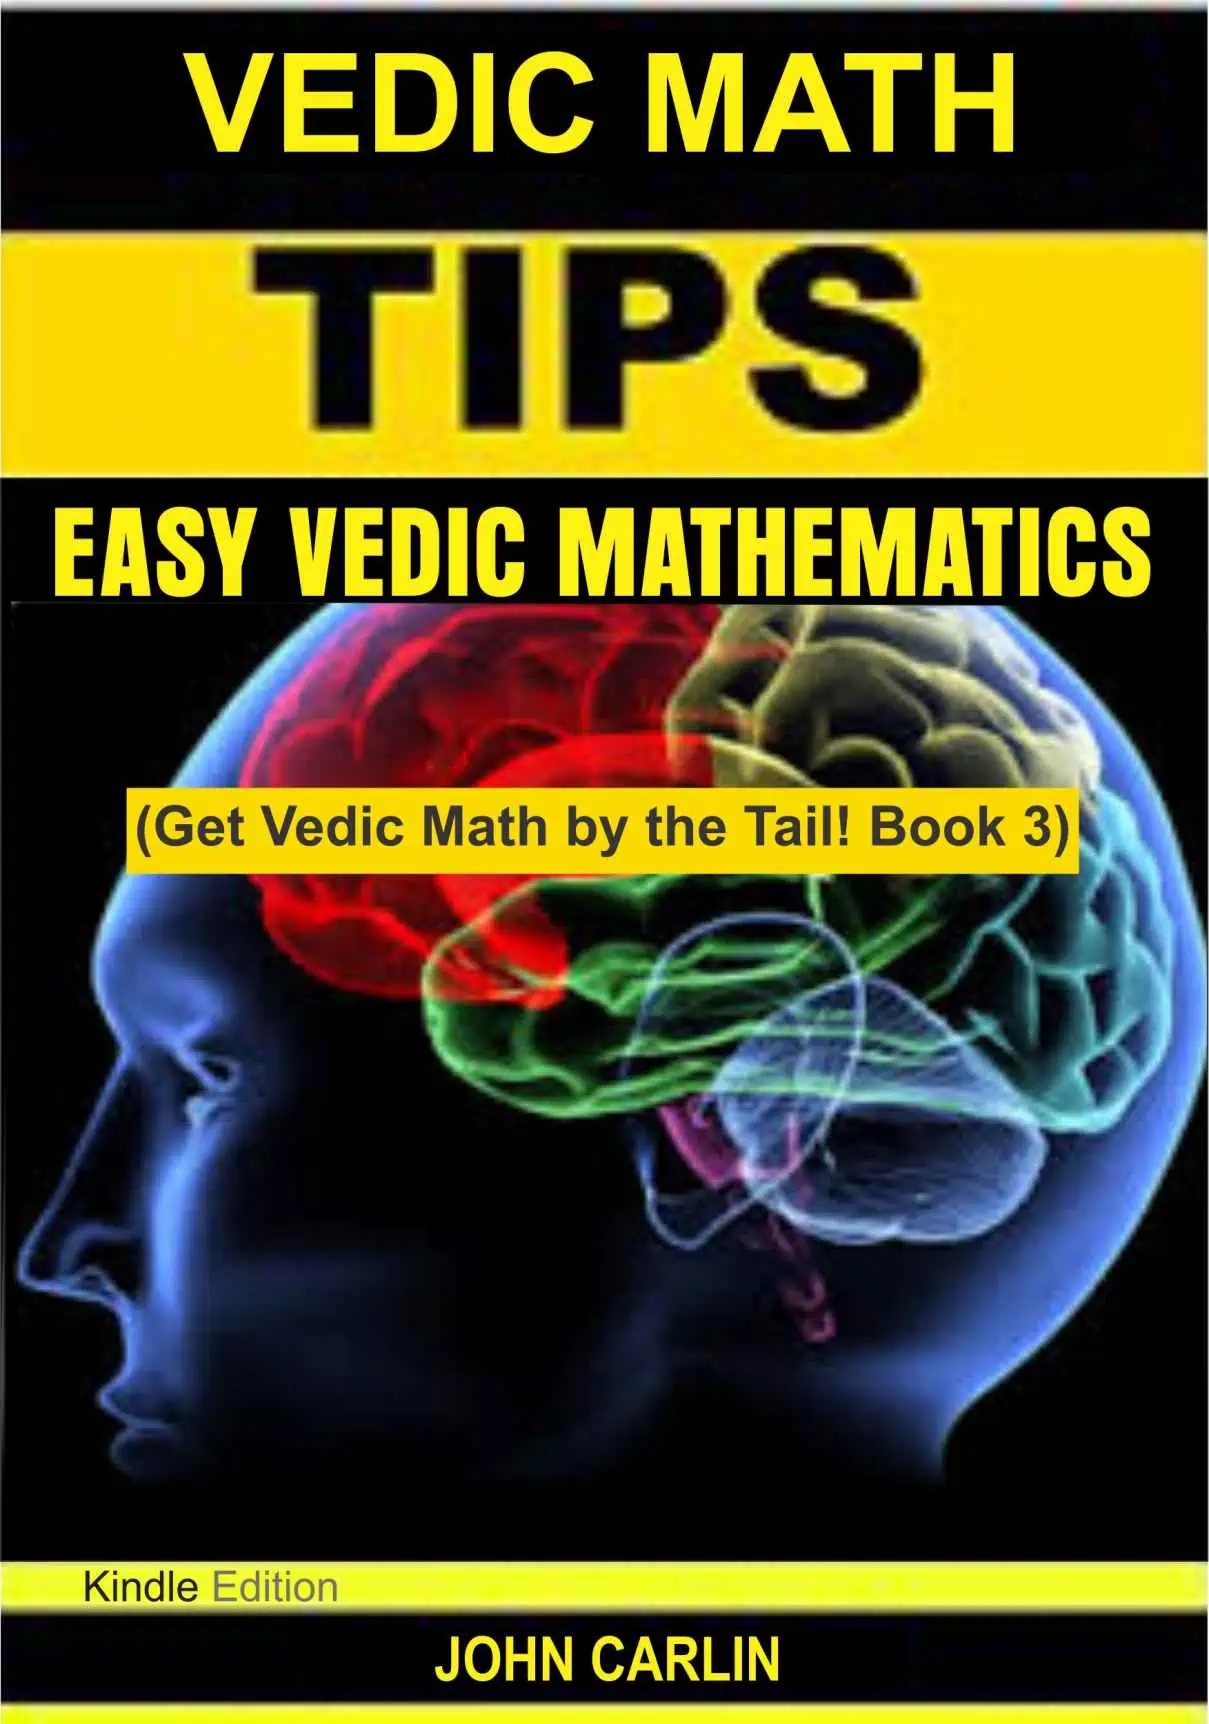 Vedic Math Tips - Easy Vedic Mathematics - John Carlin PDF